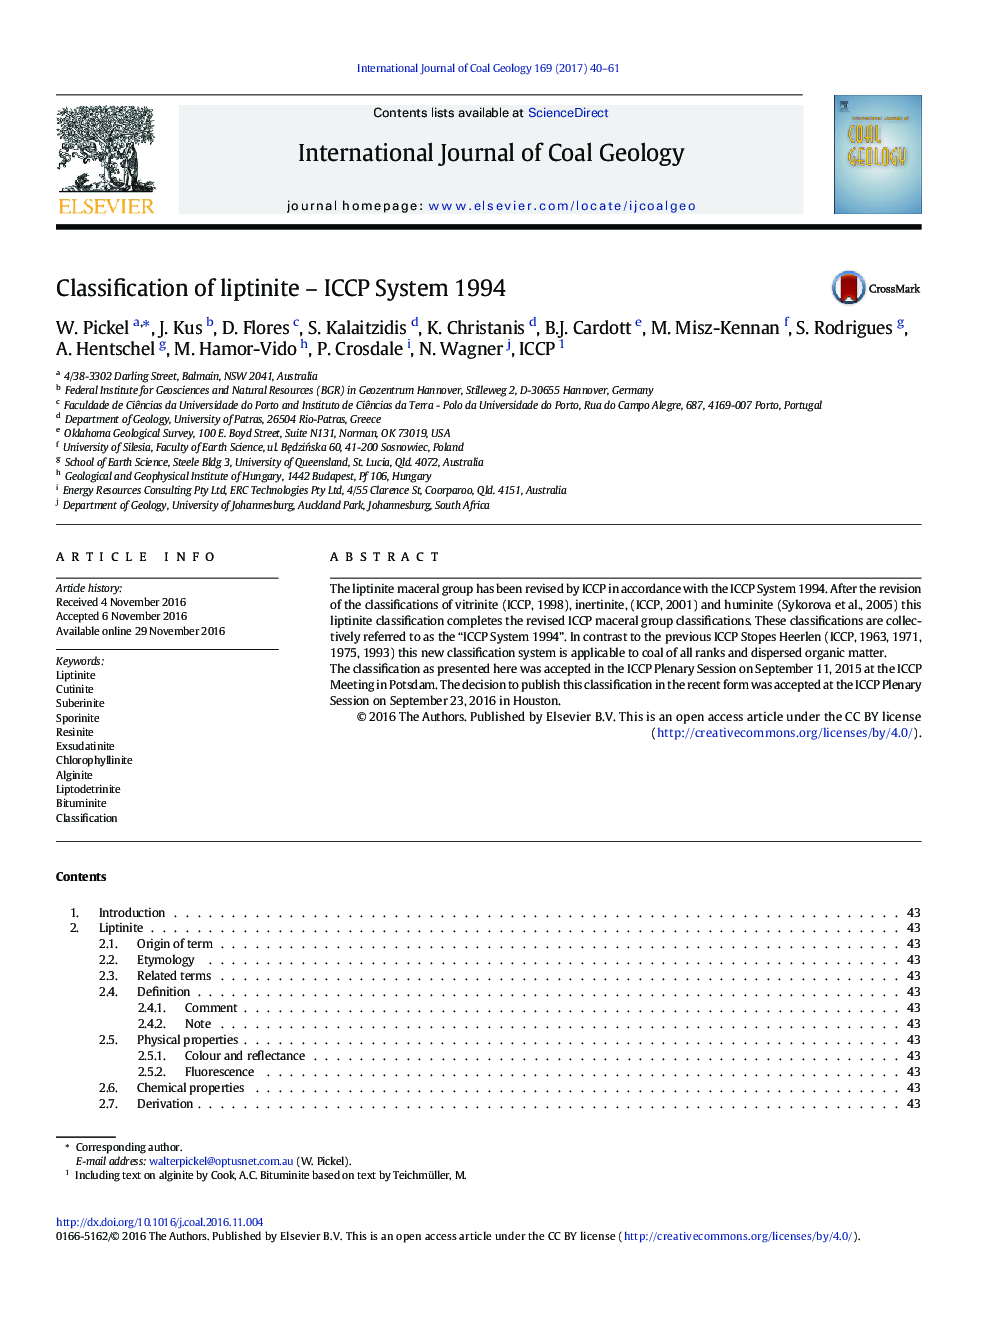 Classification of liptinite - ICCP System 1994